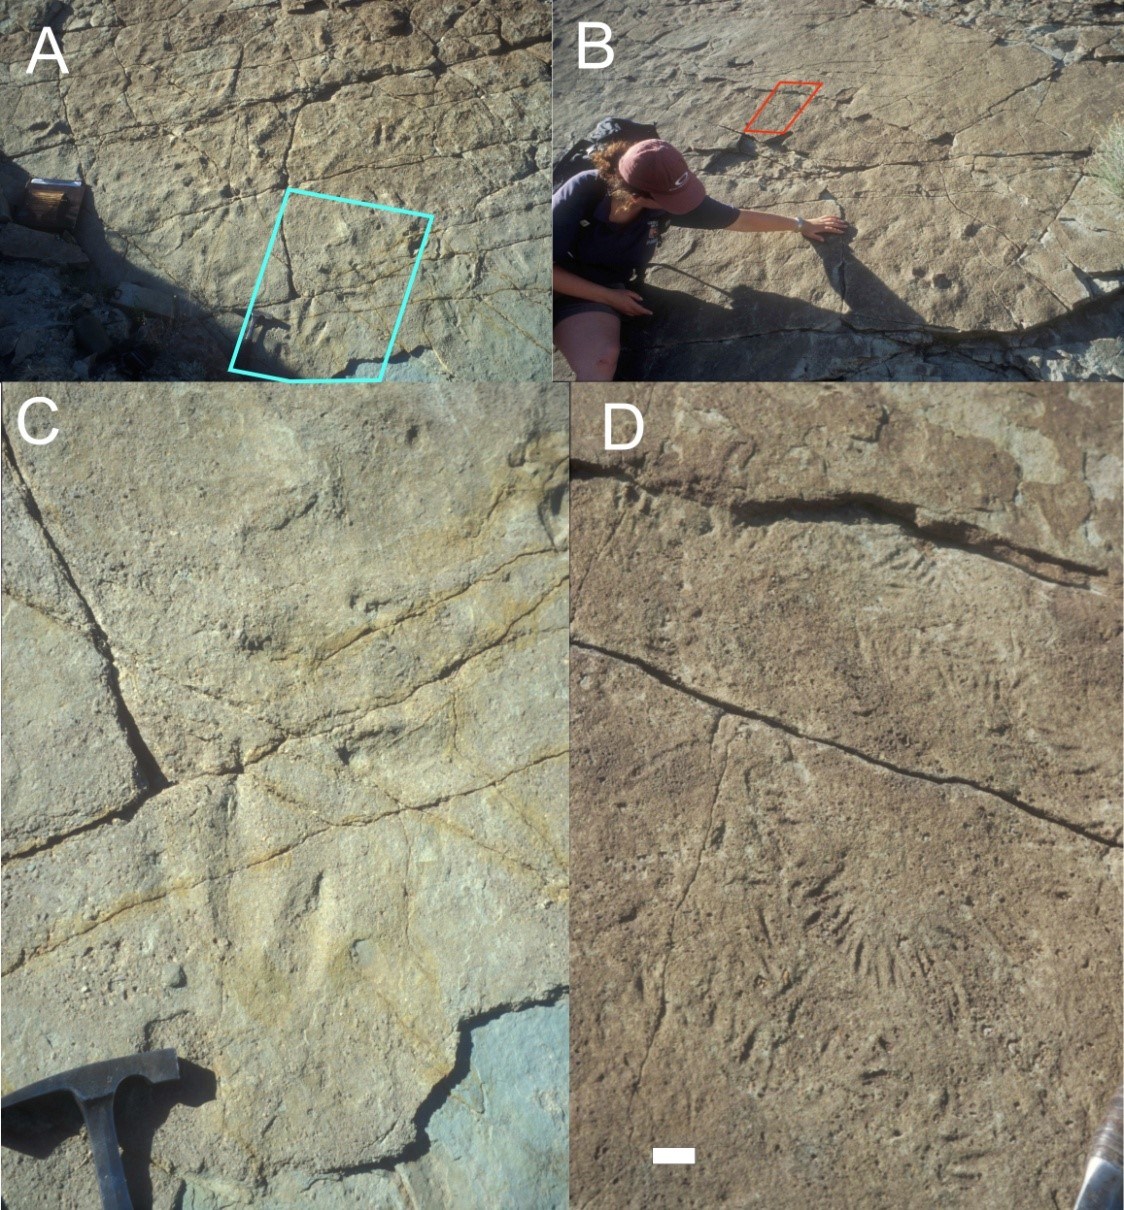 4 photos of dinosaur tracks and feeding traces on rock slab surfaces